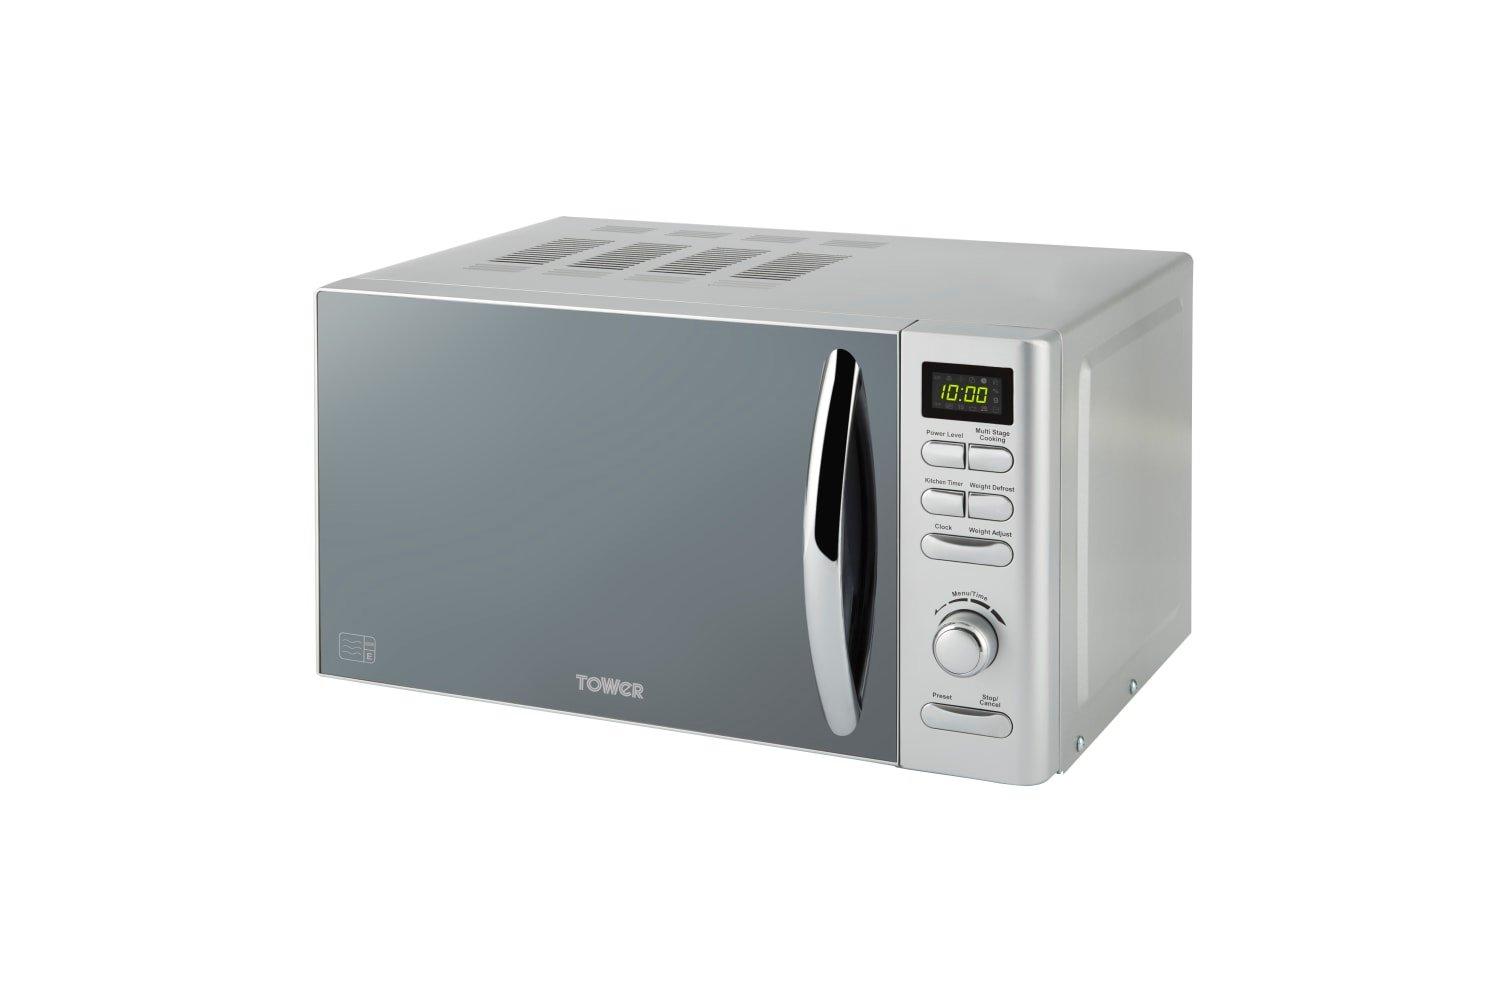 Infinity 800W 20 Litre Digital Microwave